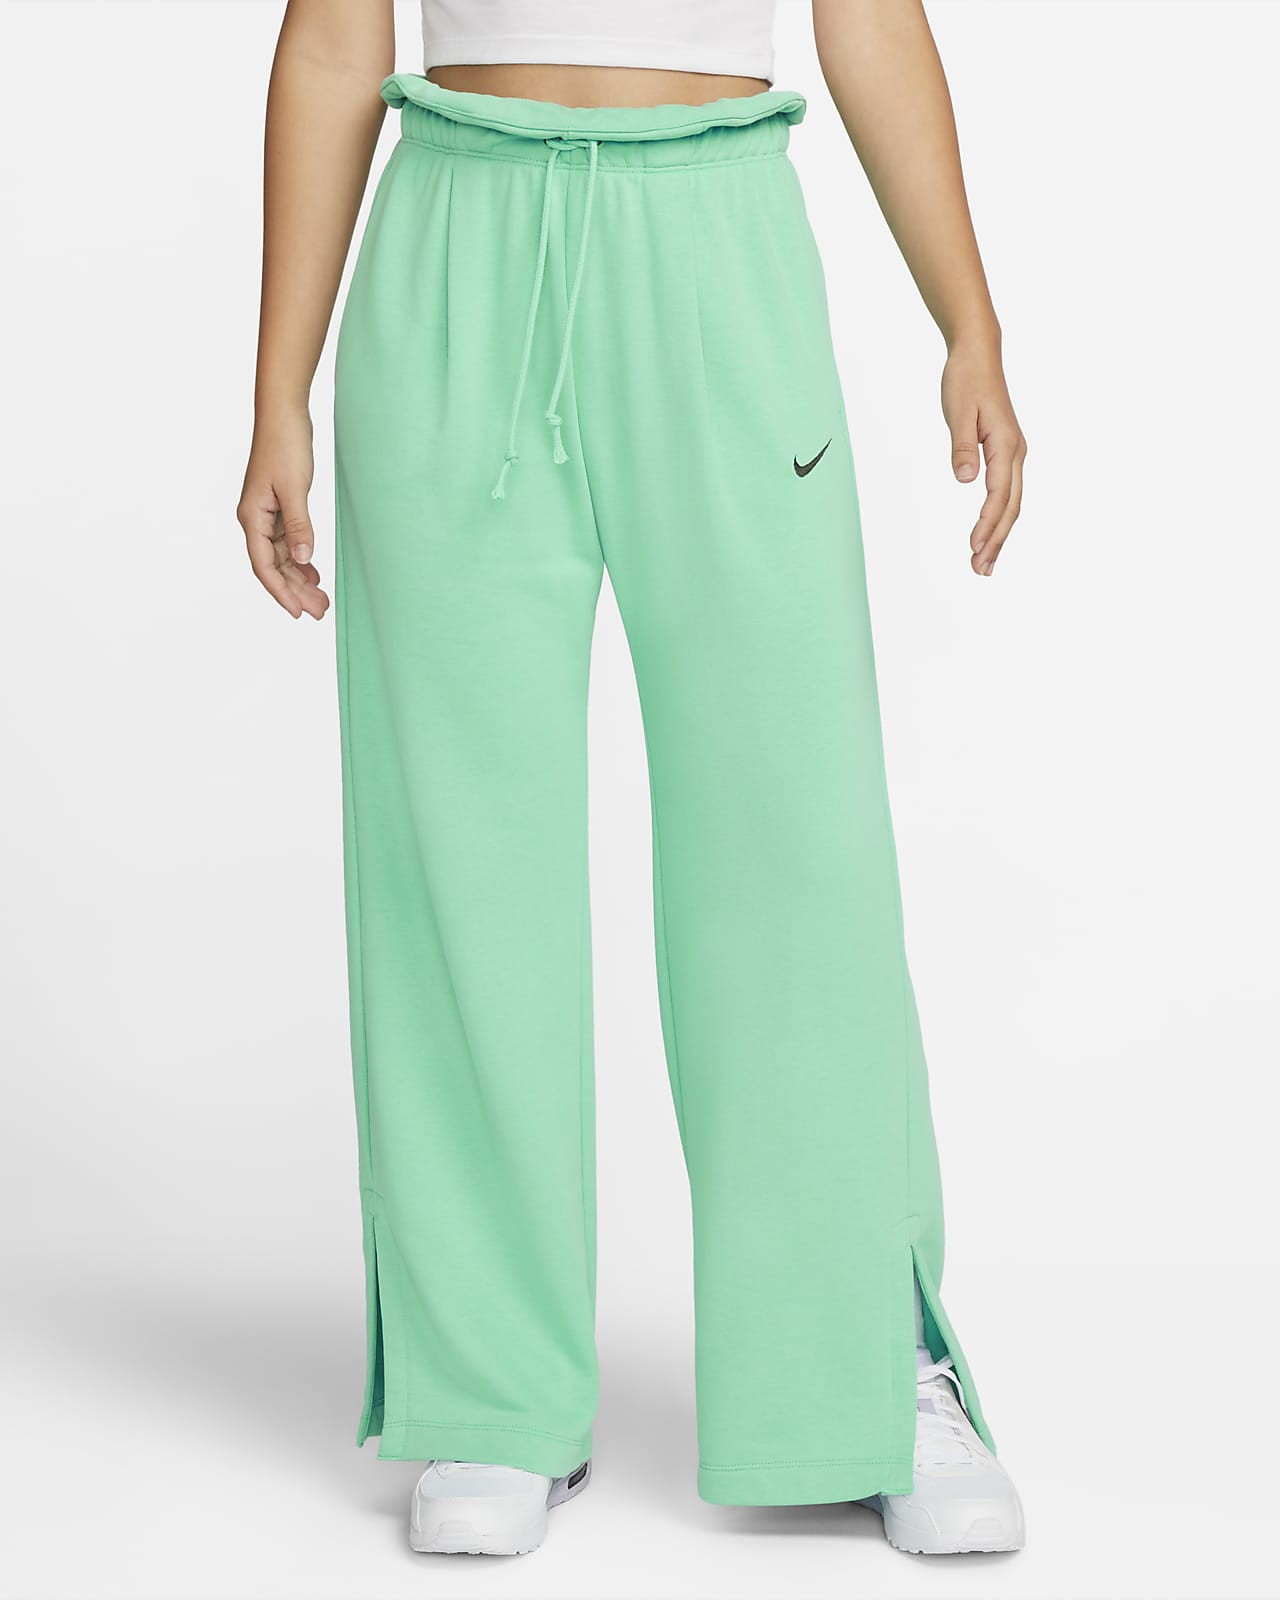 Escribe email Pacer aumento Pants con dobladillo abierto de tejido Fleece de cintura alta para mujer  Nike Sportswear Everyday Modern. Nike.com